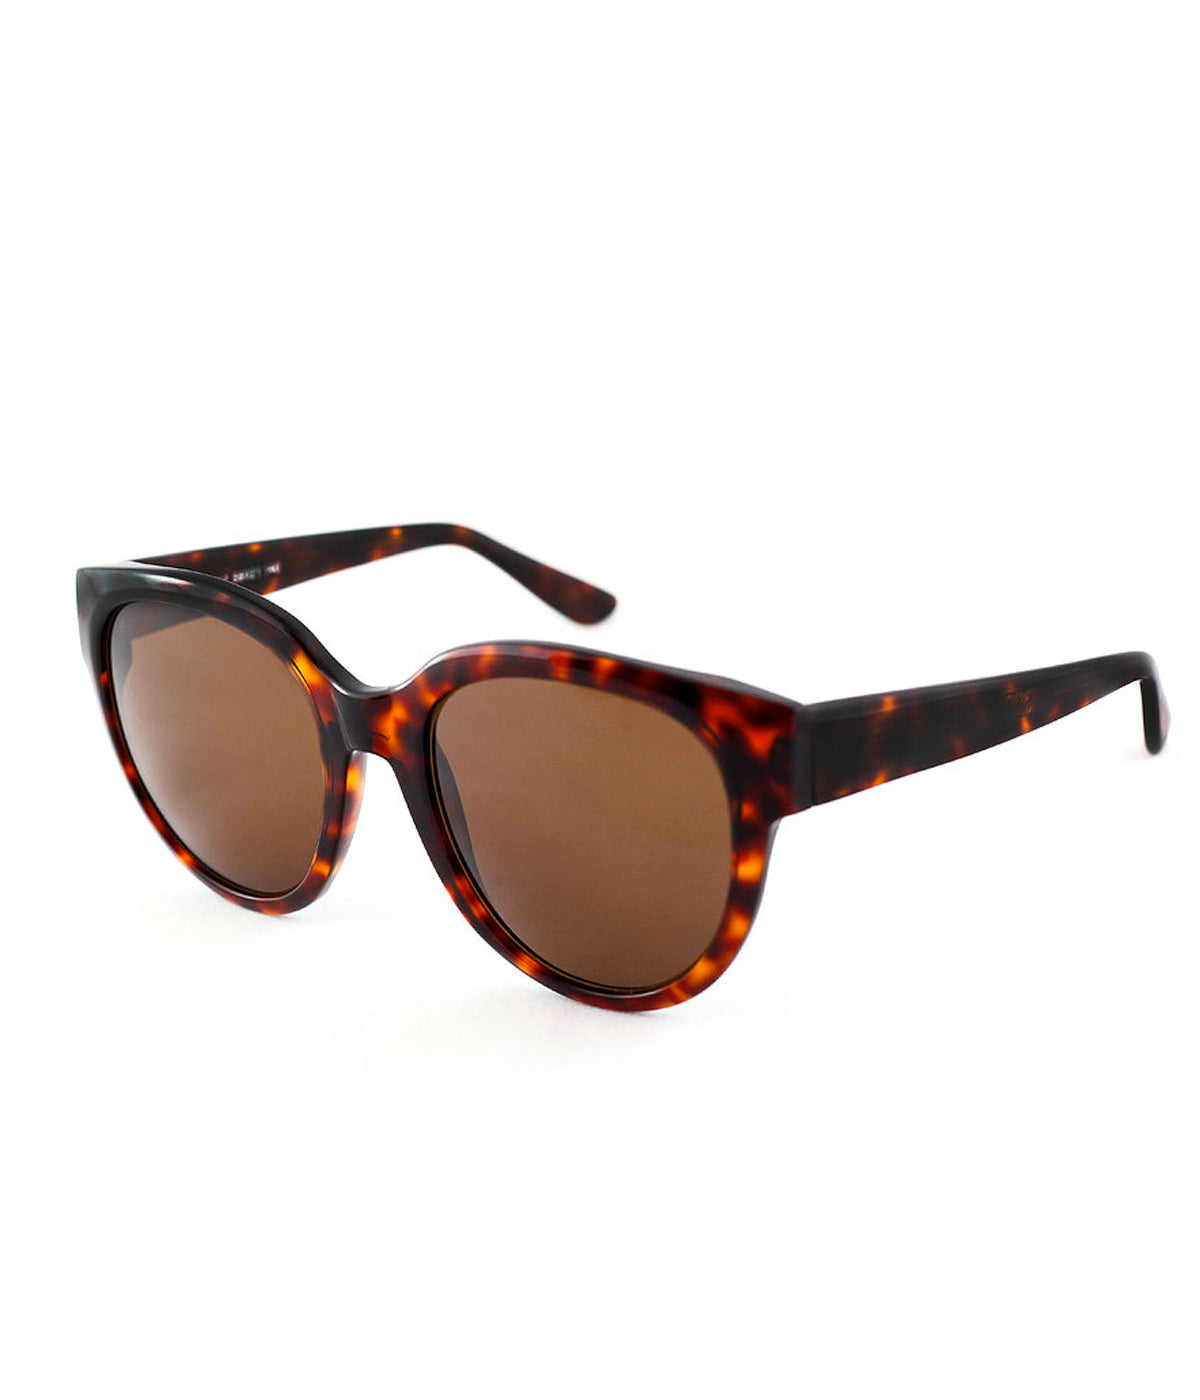 Vittoria Sunglasses in Dark Avana & Brown